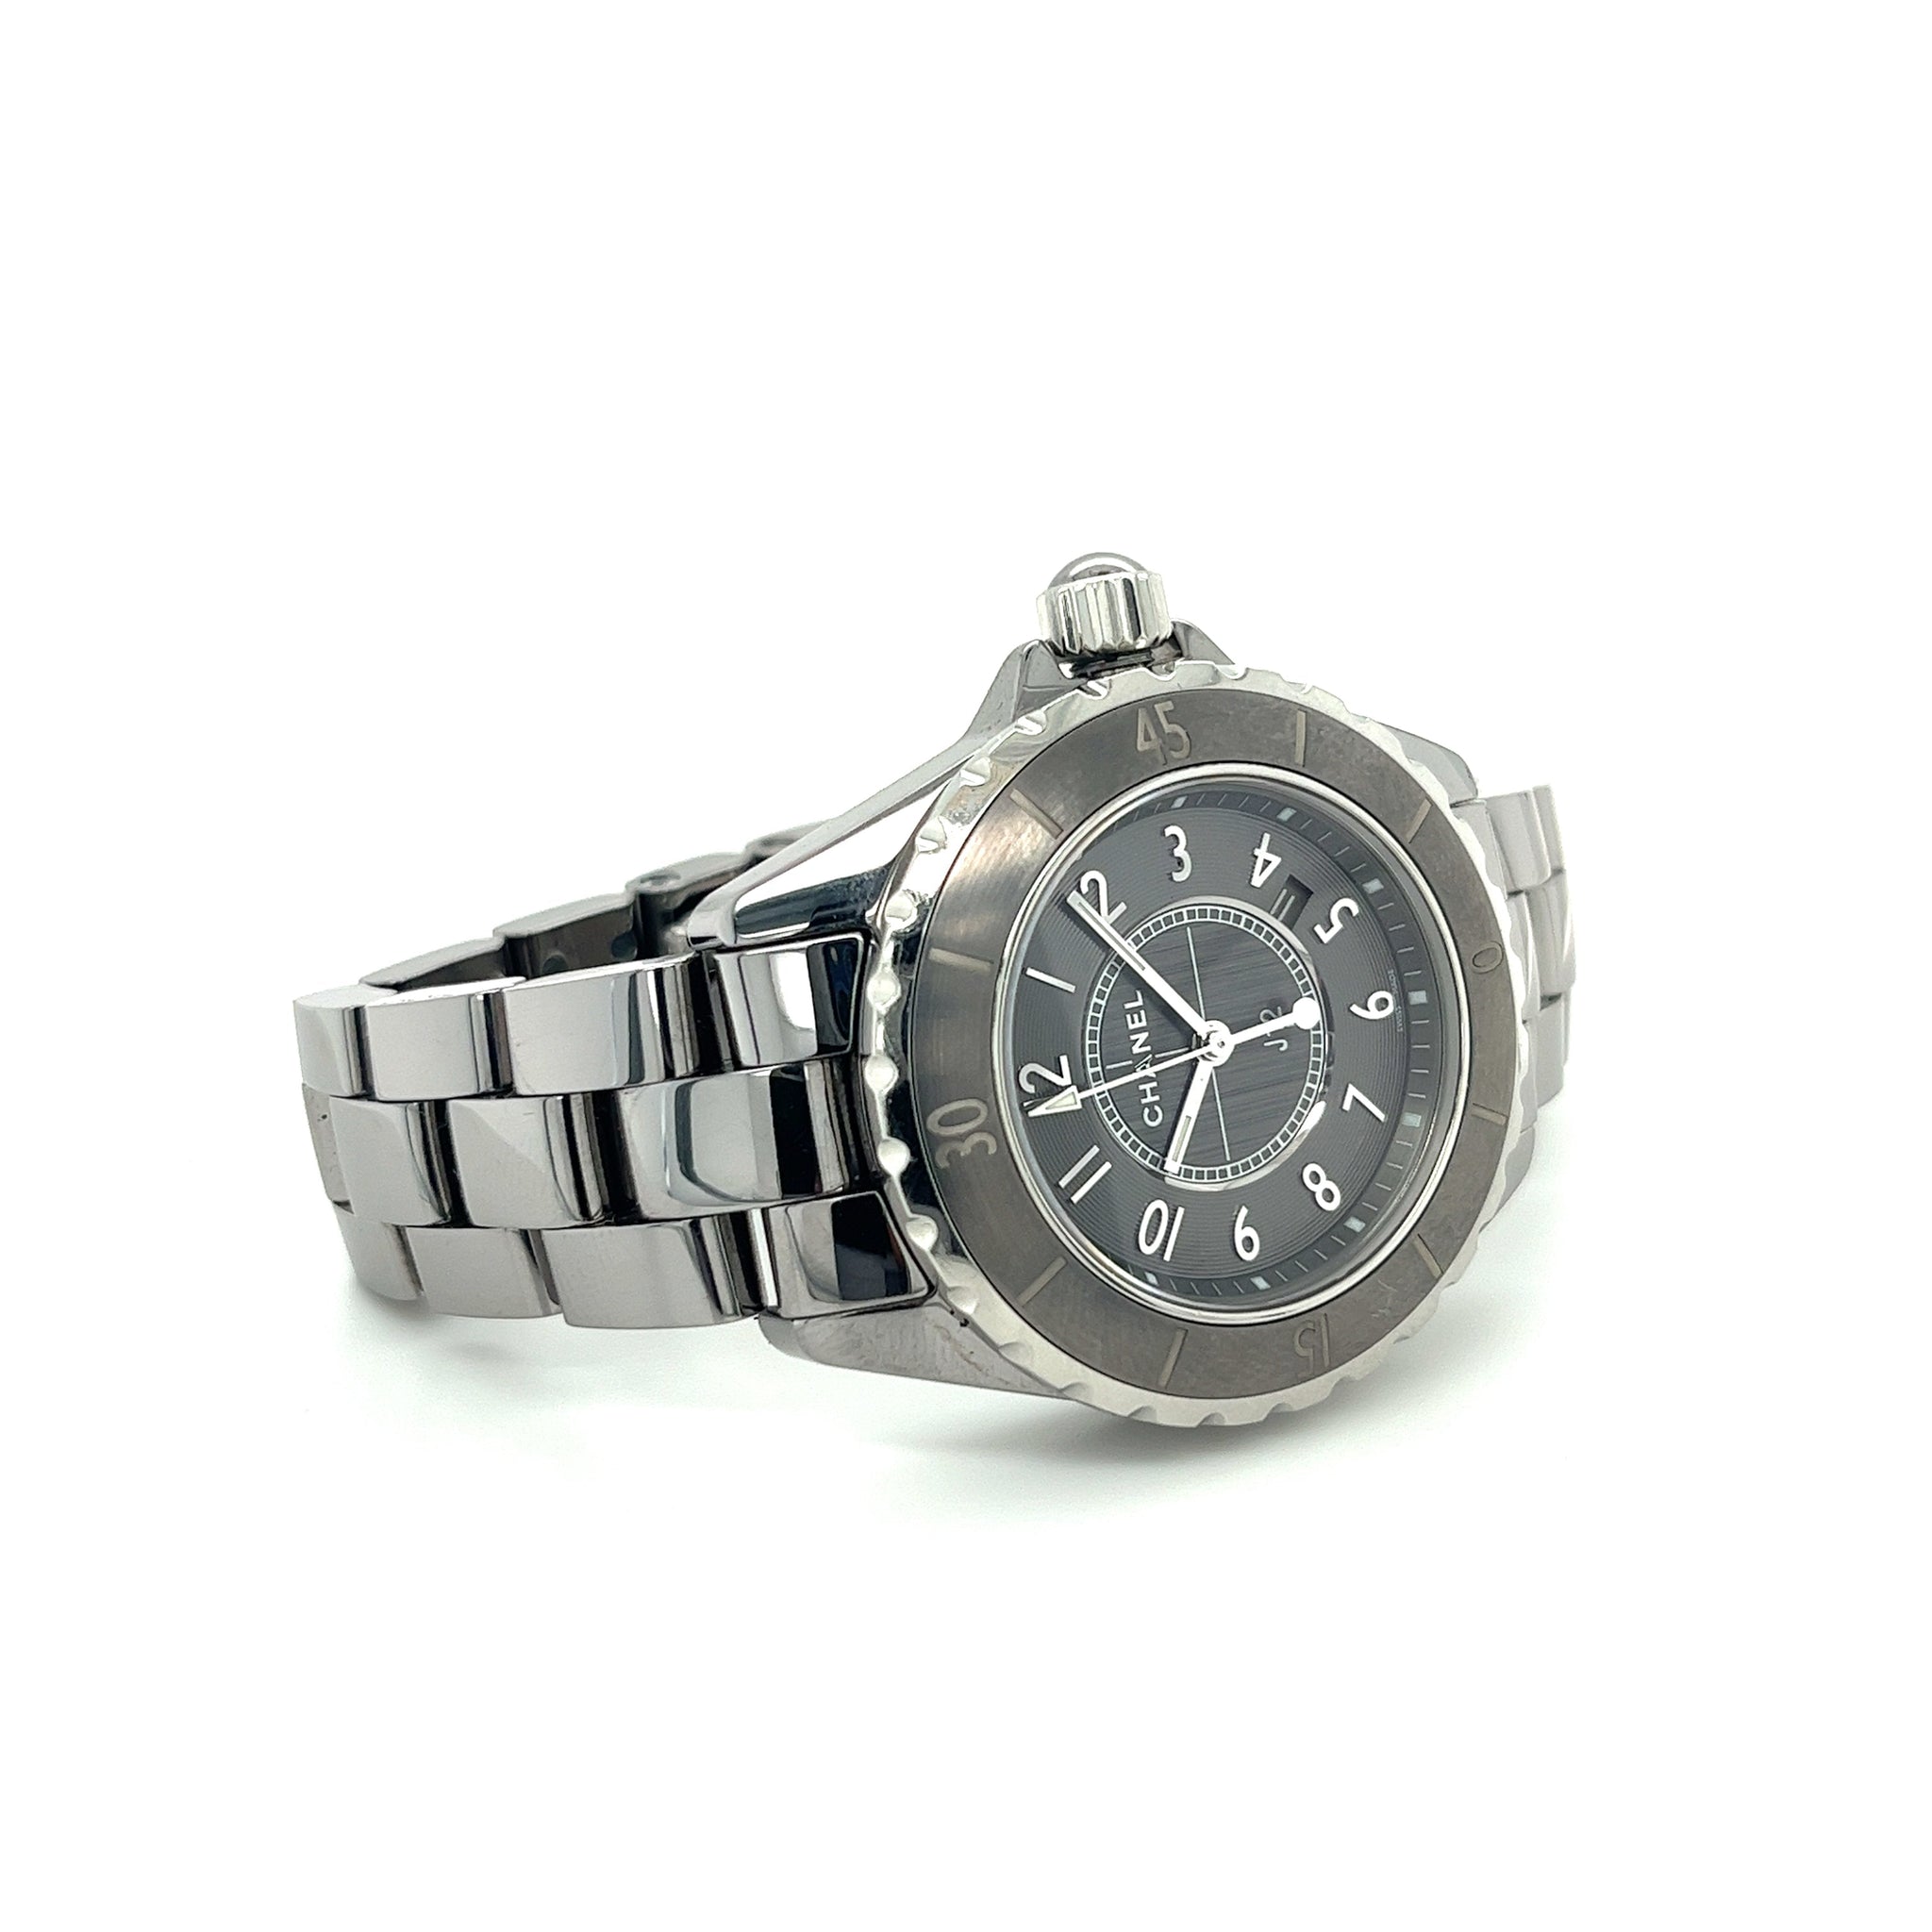 Chanel J12 Quartz Watch